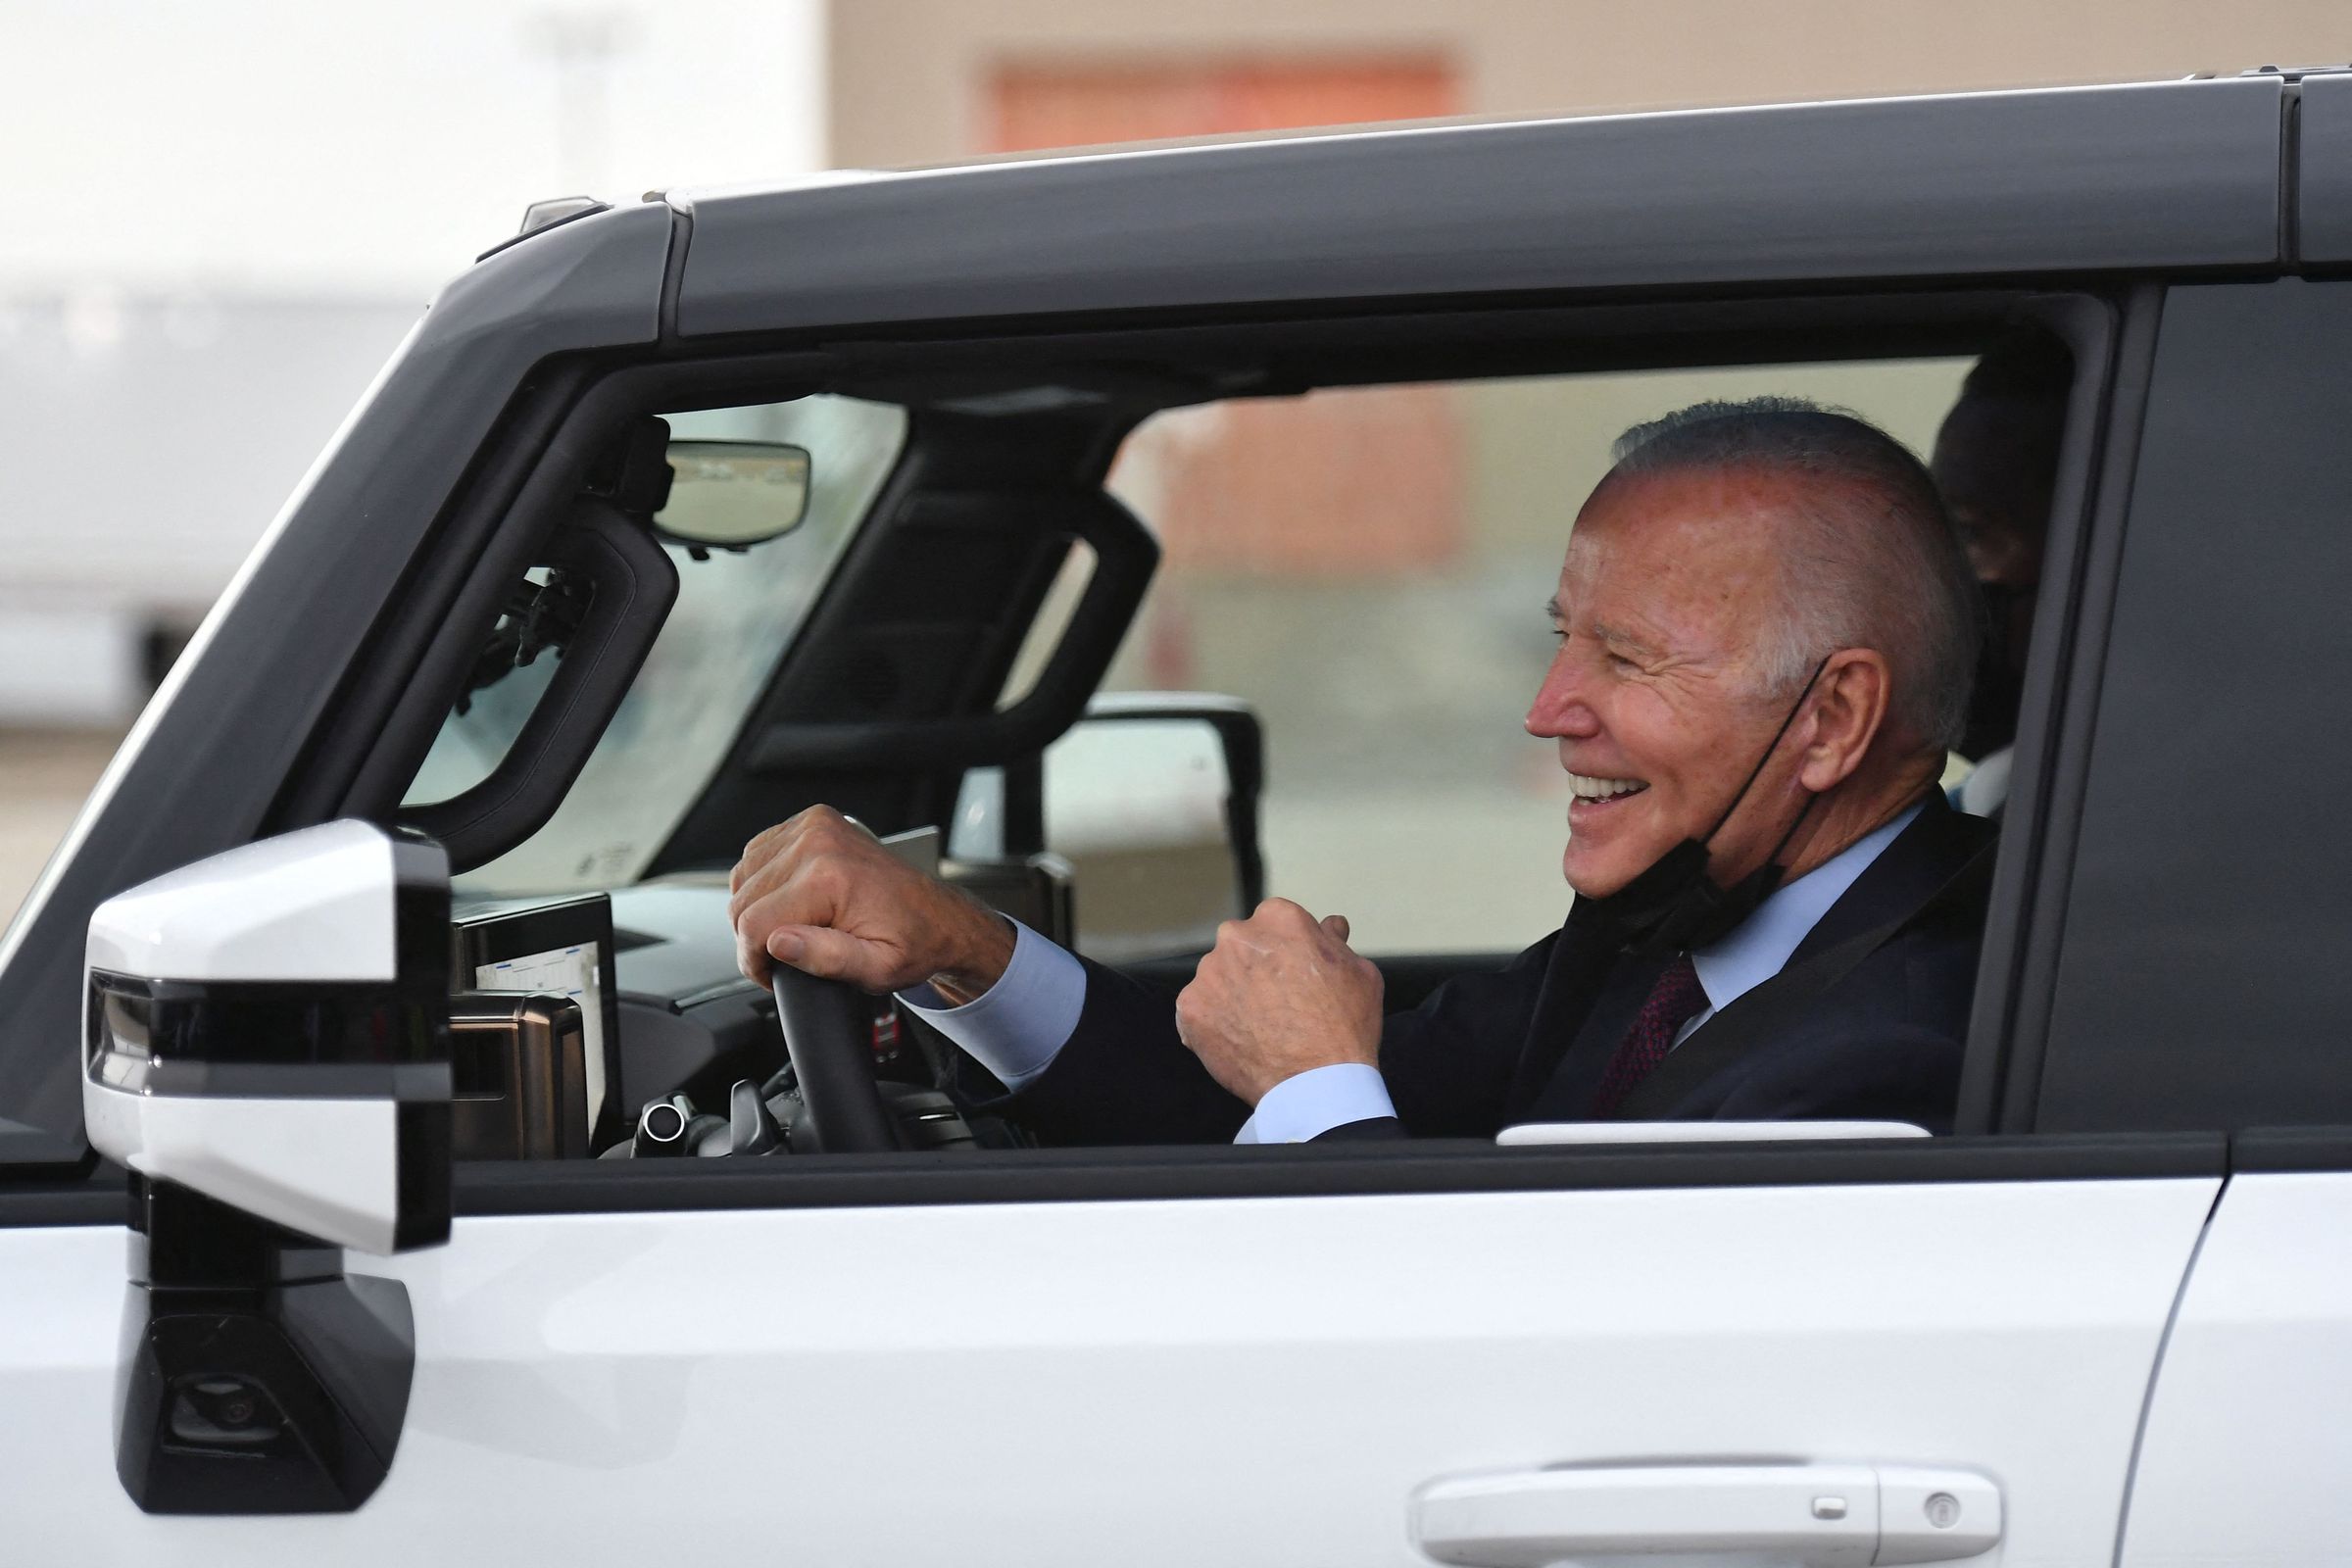 A photo of President Joe Biden smiling behind the wheel of a car